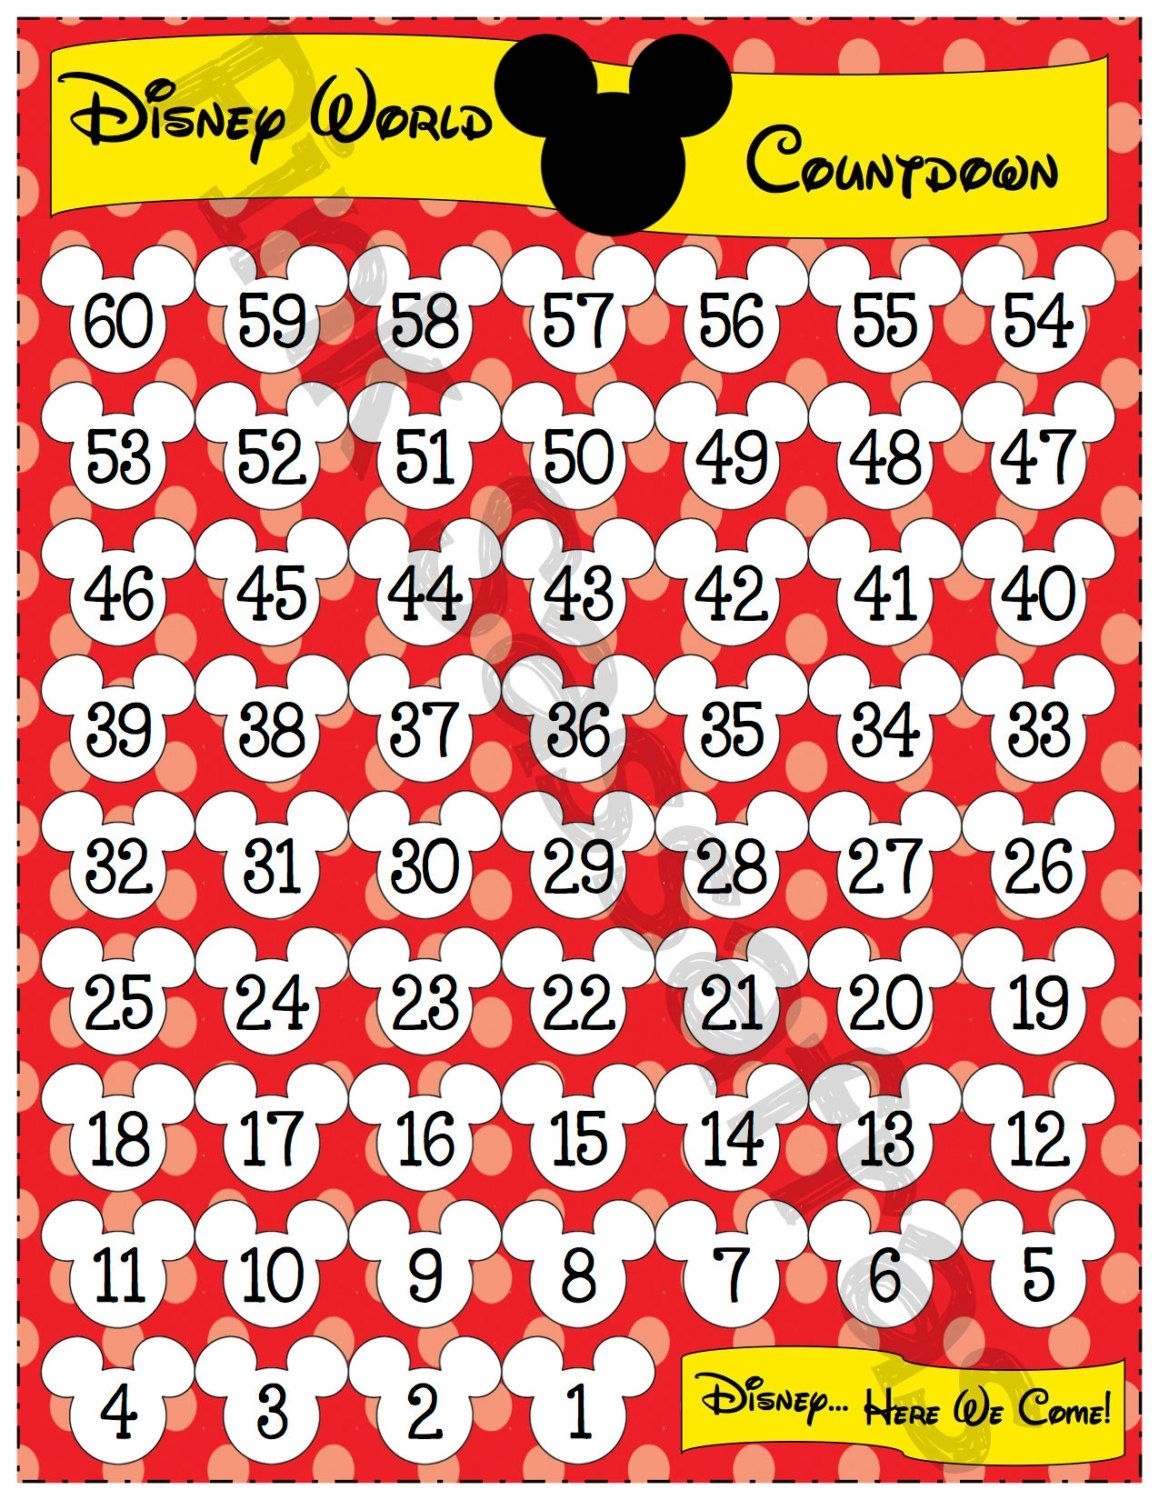 Latest Printable Disney Countdown | Disney Countdown Remarkable Printable Disney Countdown To 60 Calendar